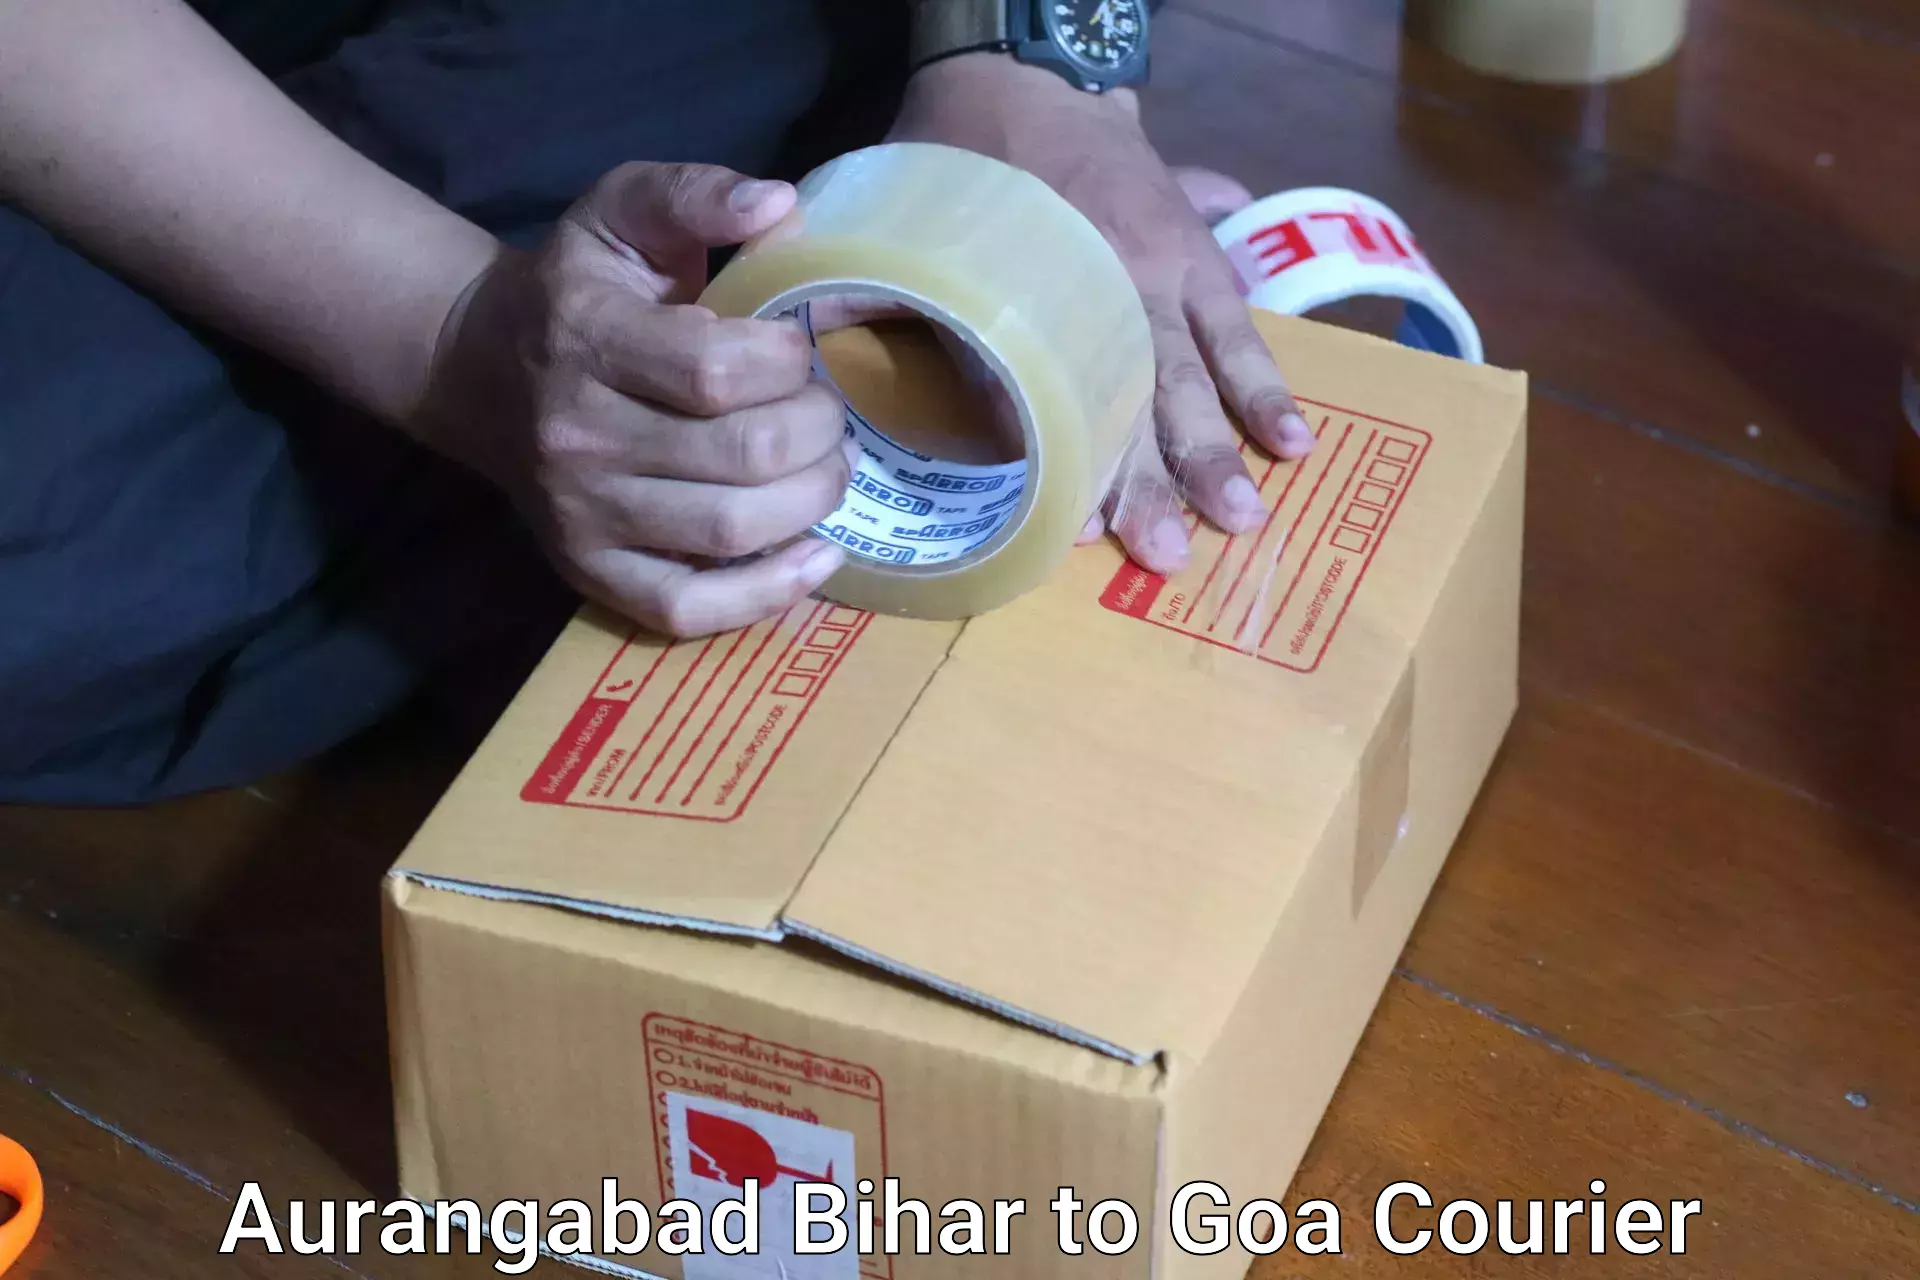 Luggage delivery app Aurangabad Bihar to Goa